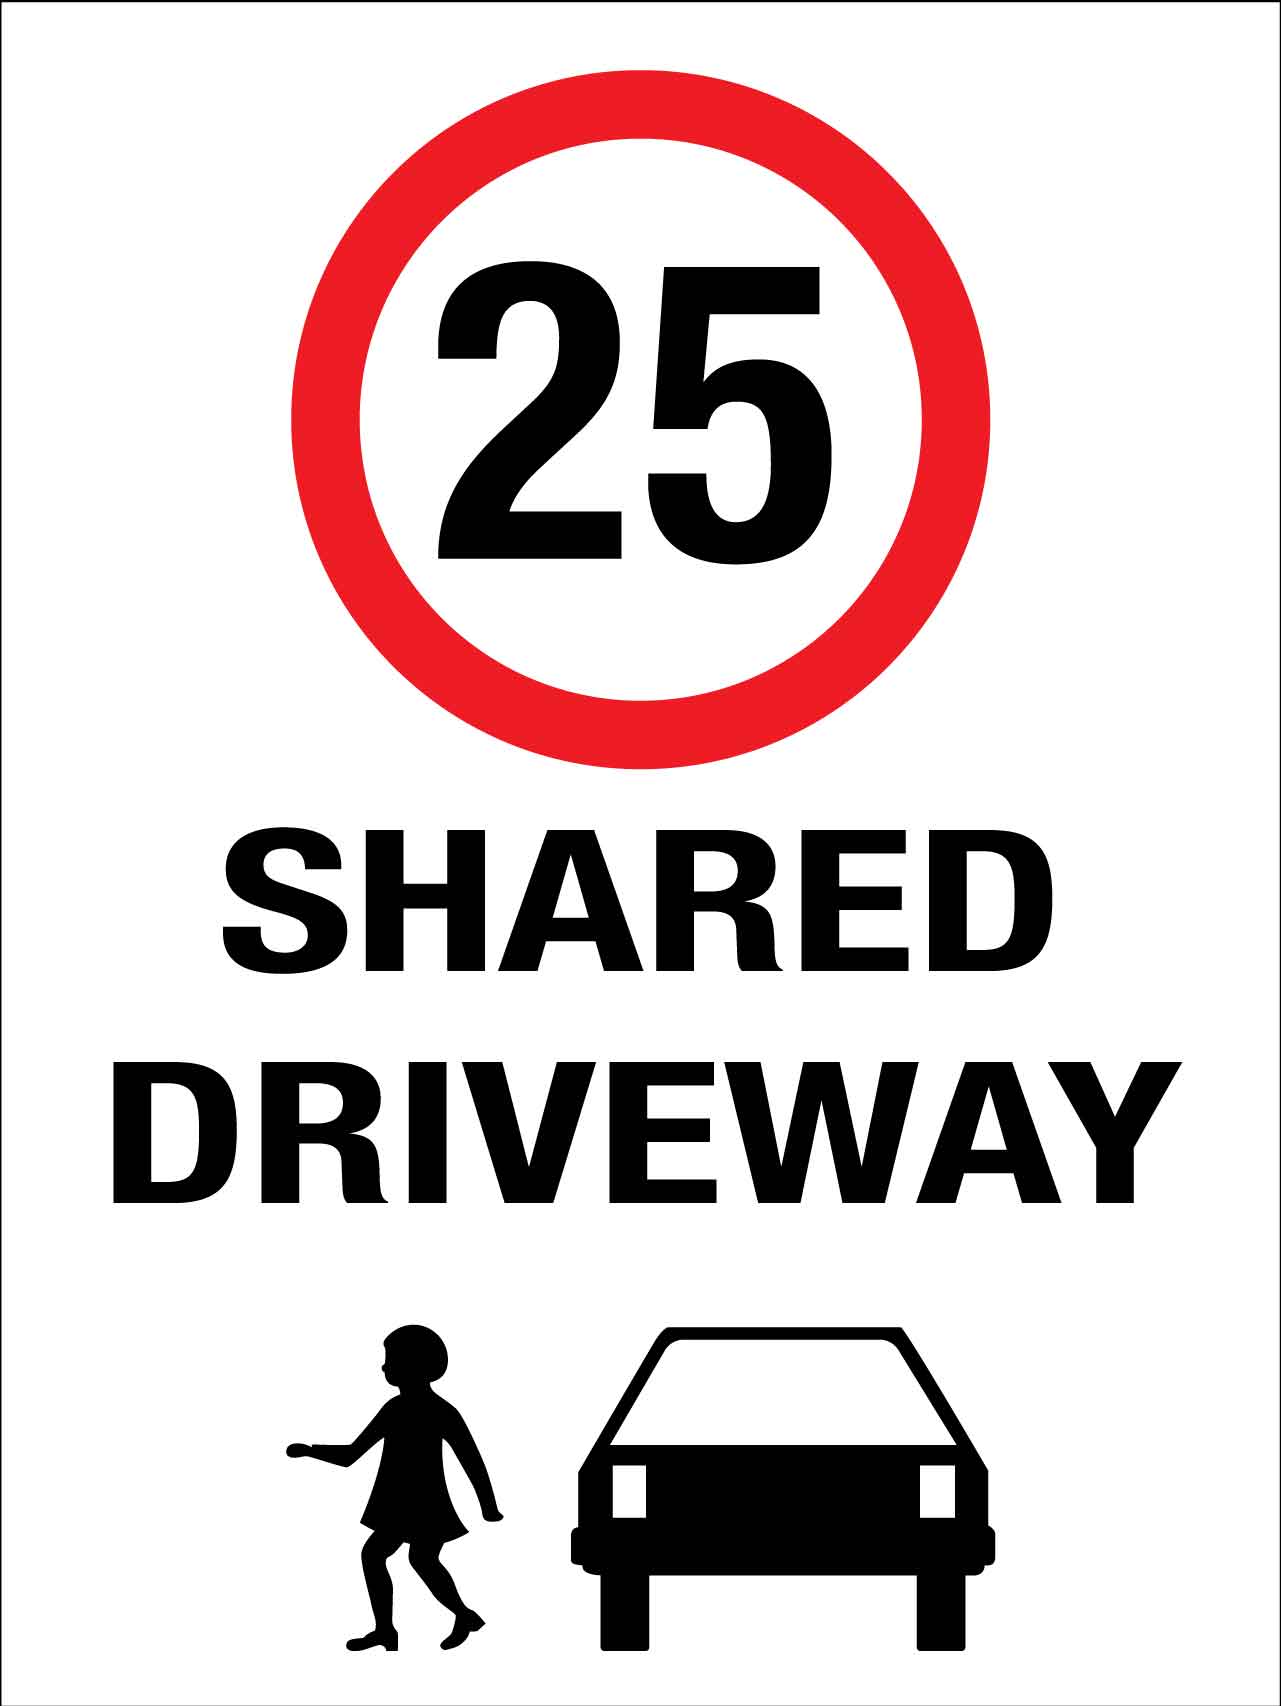 Shared Driveway 25km Speed Limit Sign